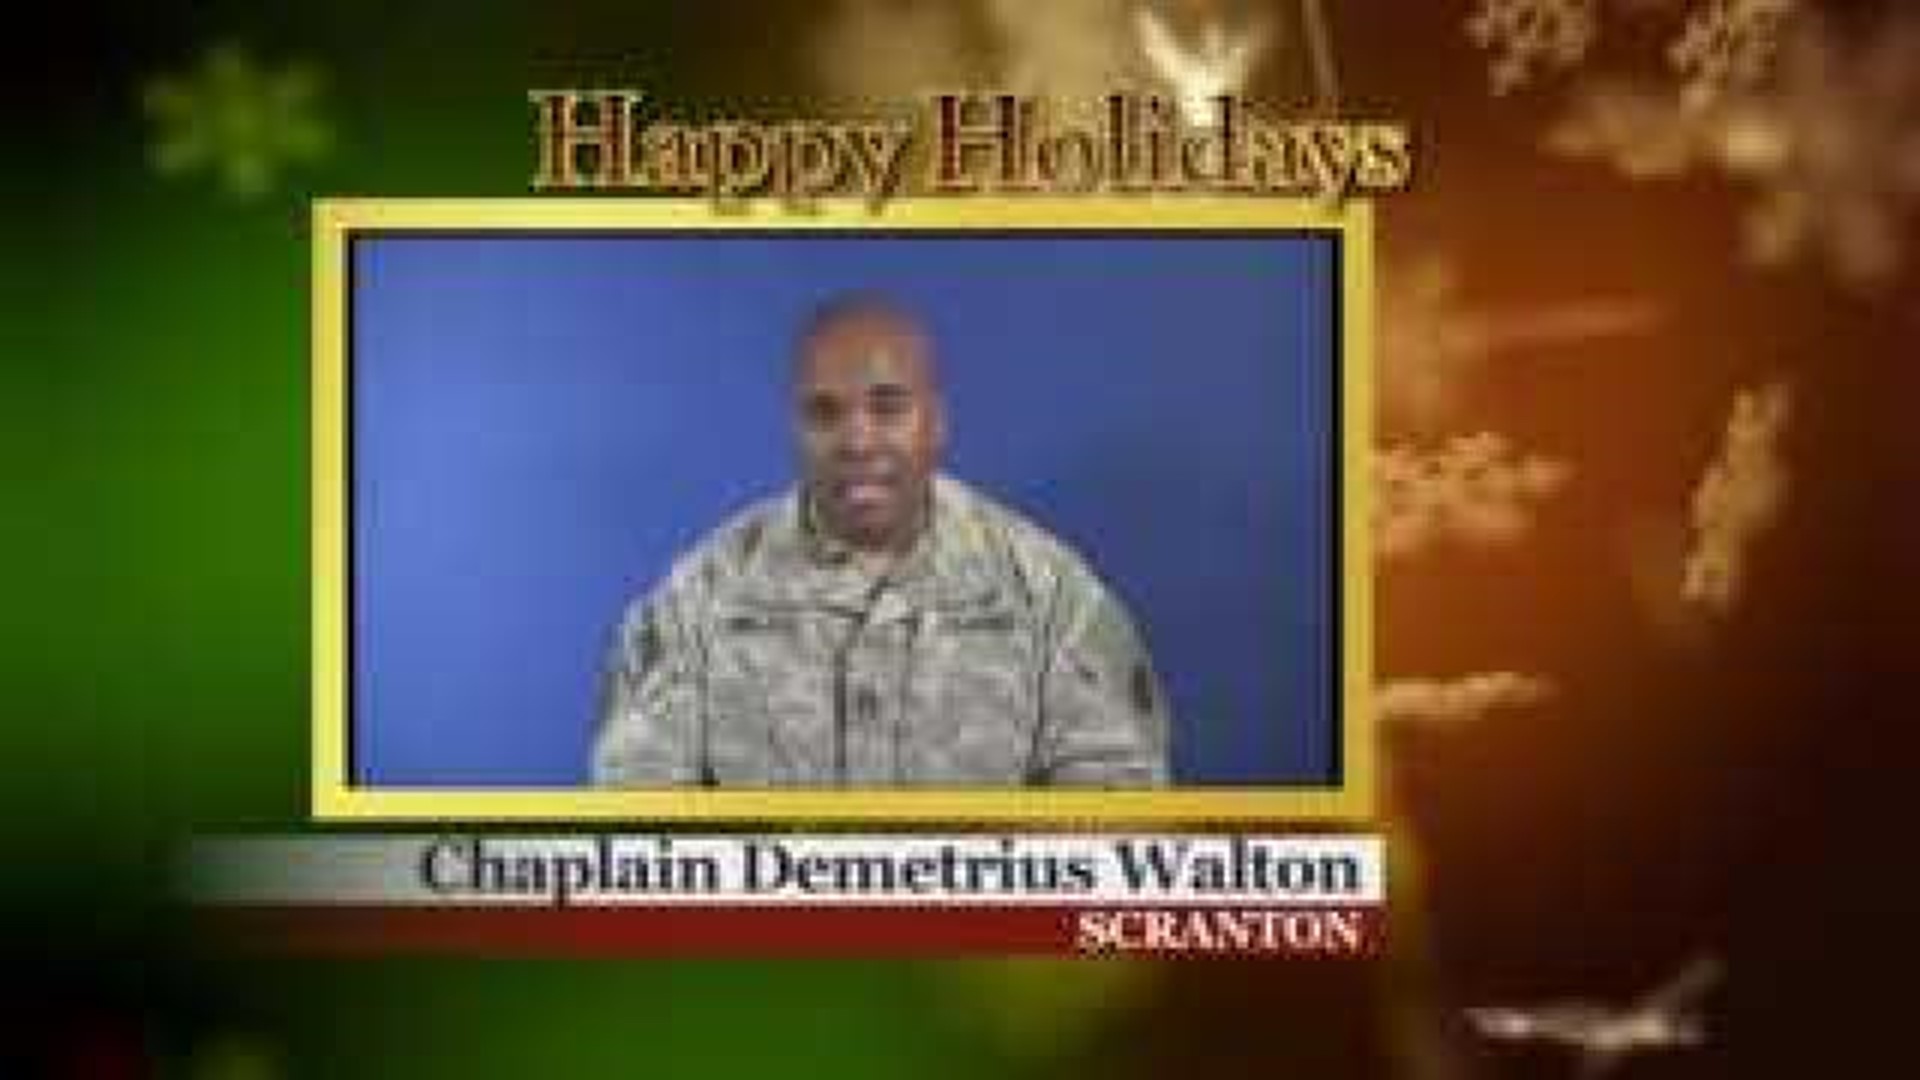 Military Greeting: Chaplain Demetrius Walton